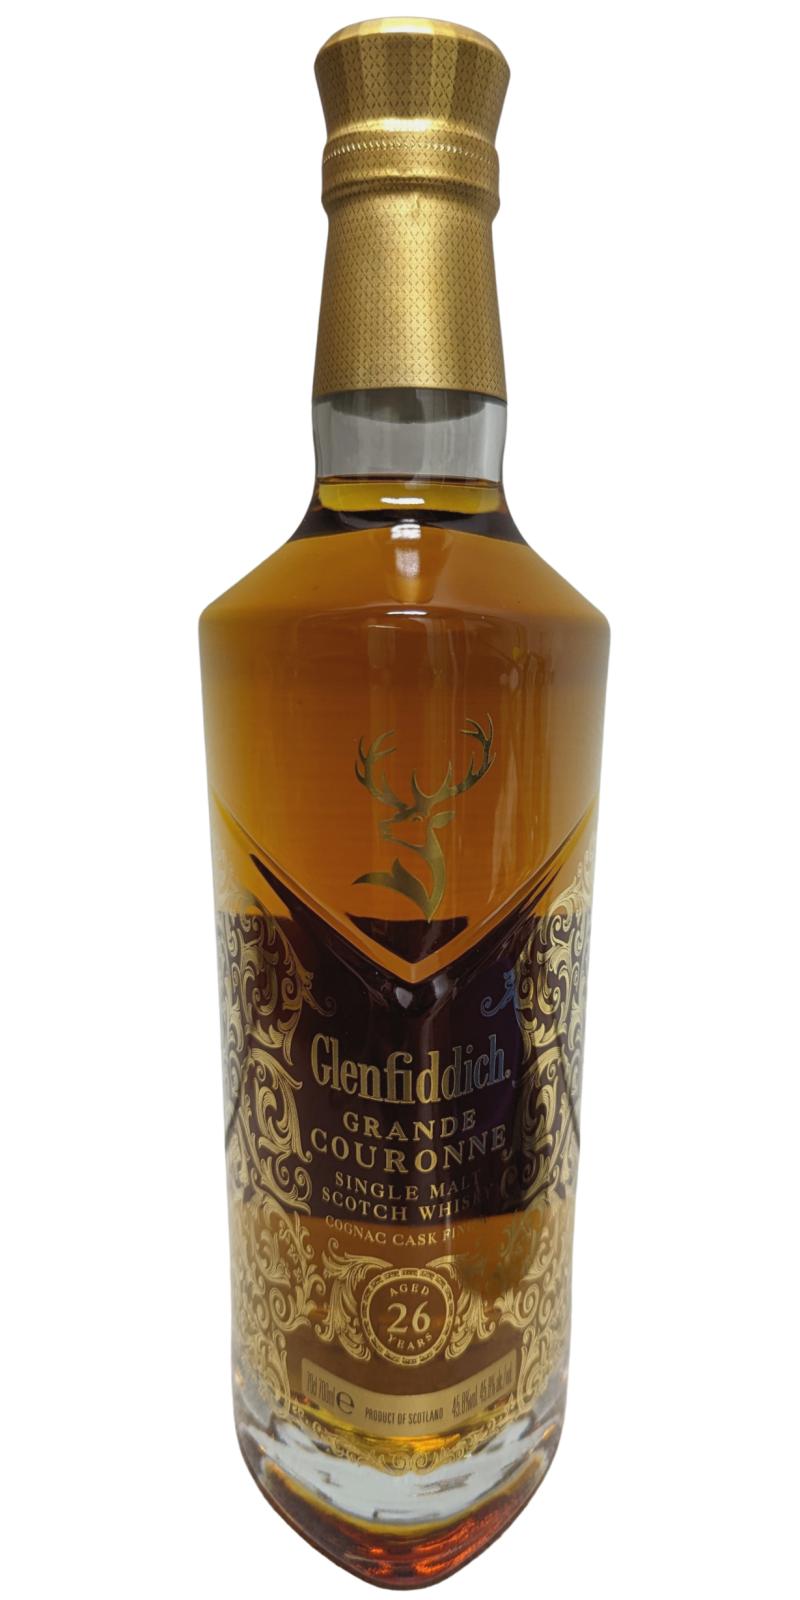 Glenfiddich 26 Year Old Grande Couronne Single Malt Scotch Whisky